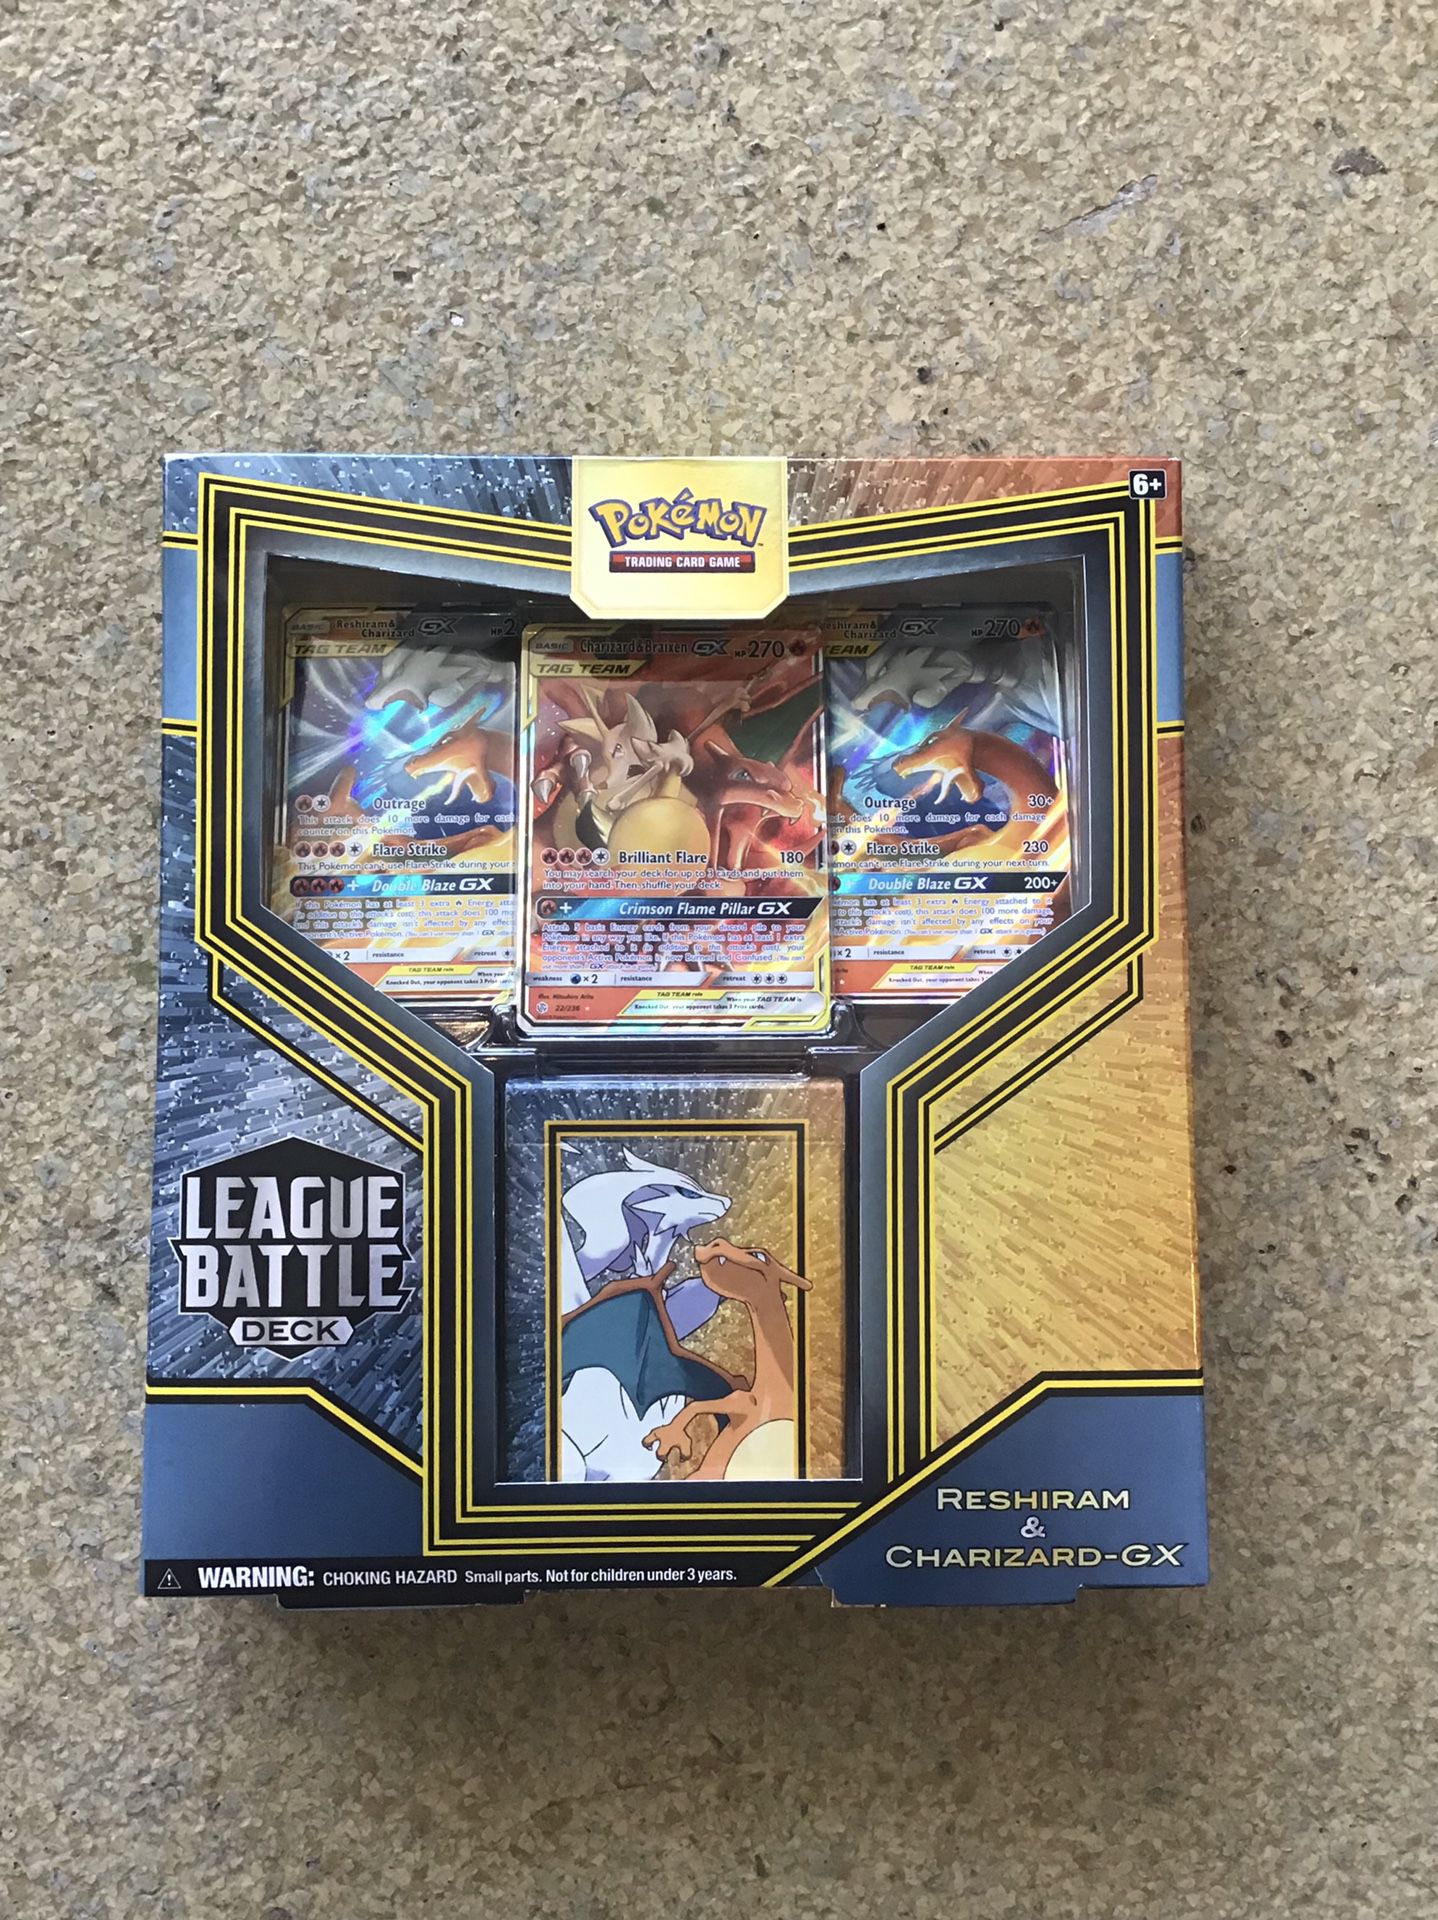 League Battle Deck: Reshiram & Charizard GX Pokemon TCG - Sealed